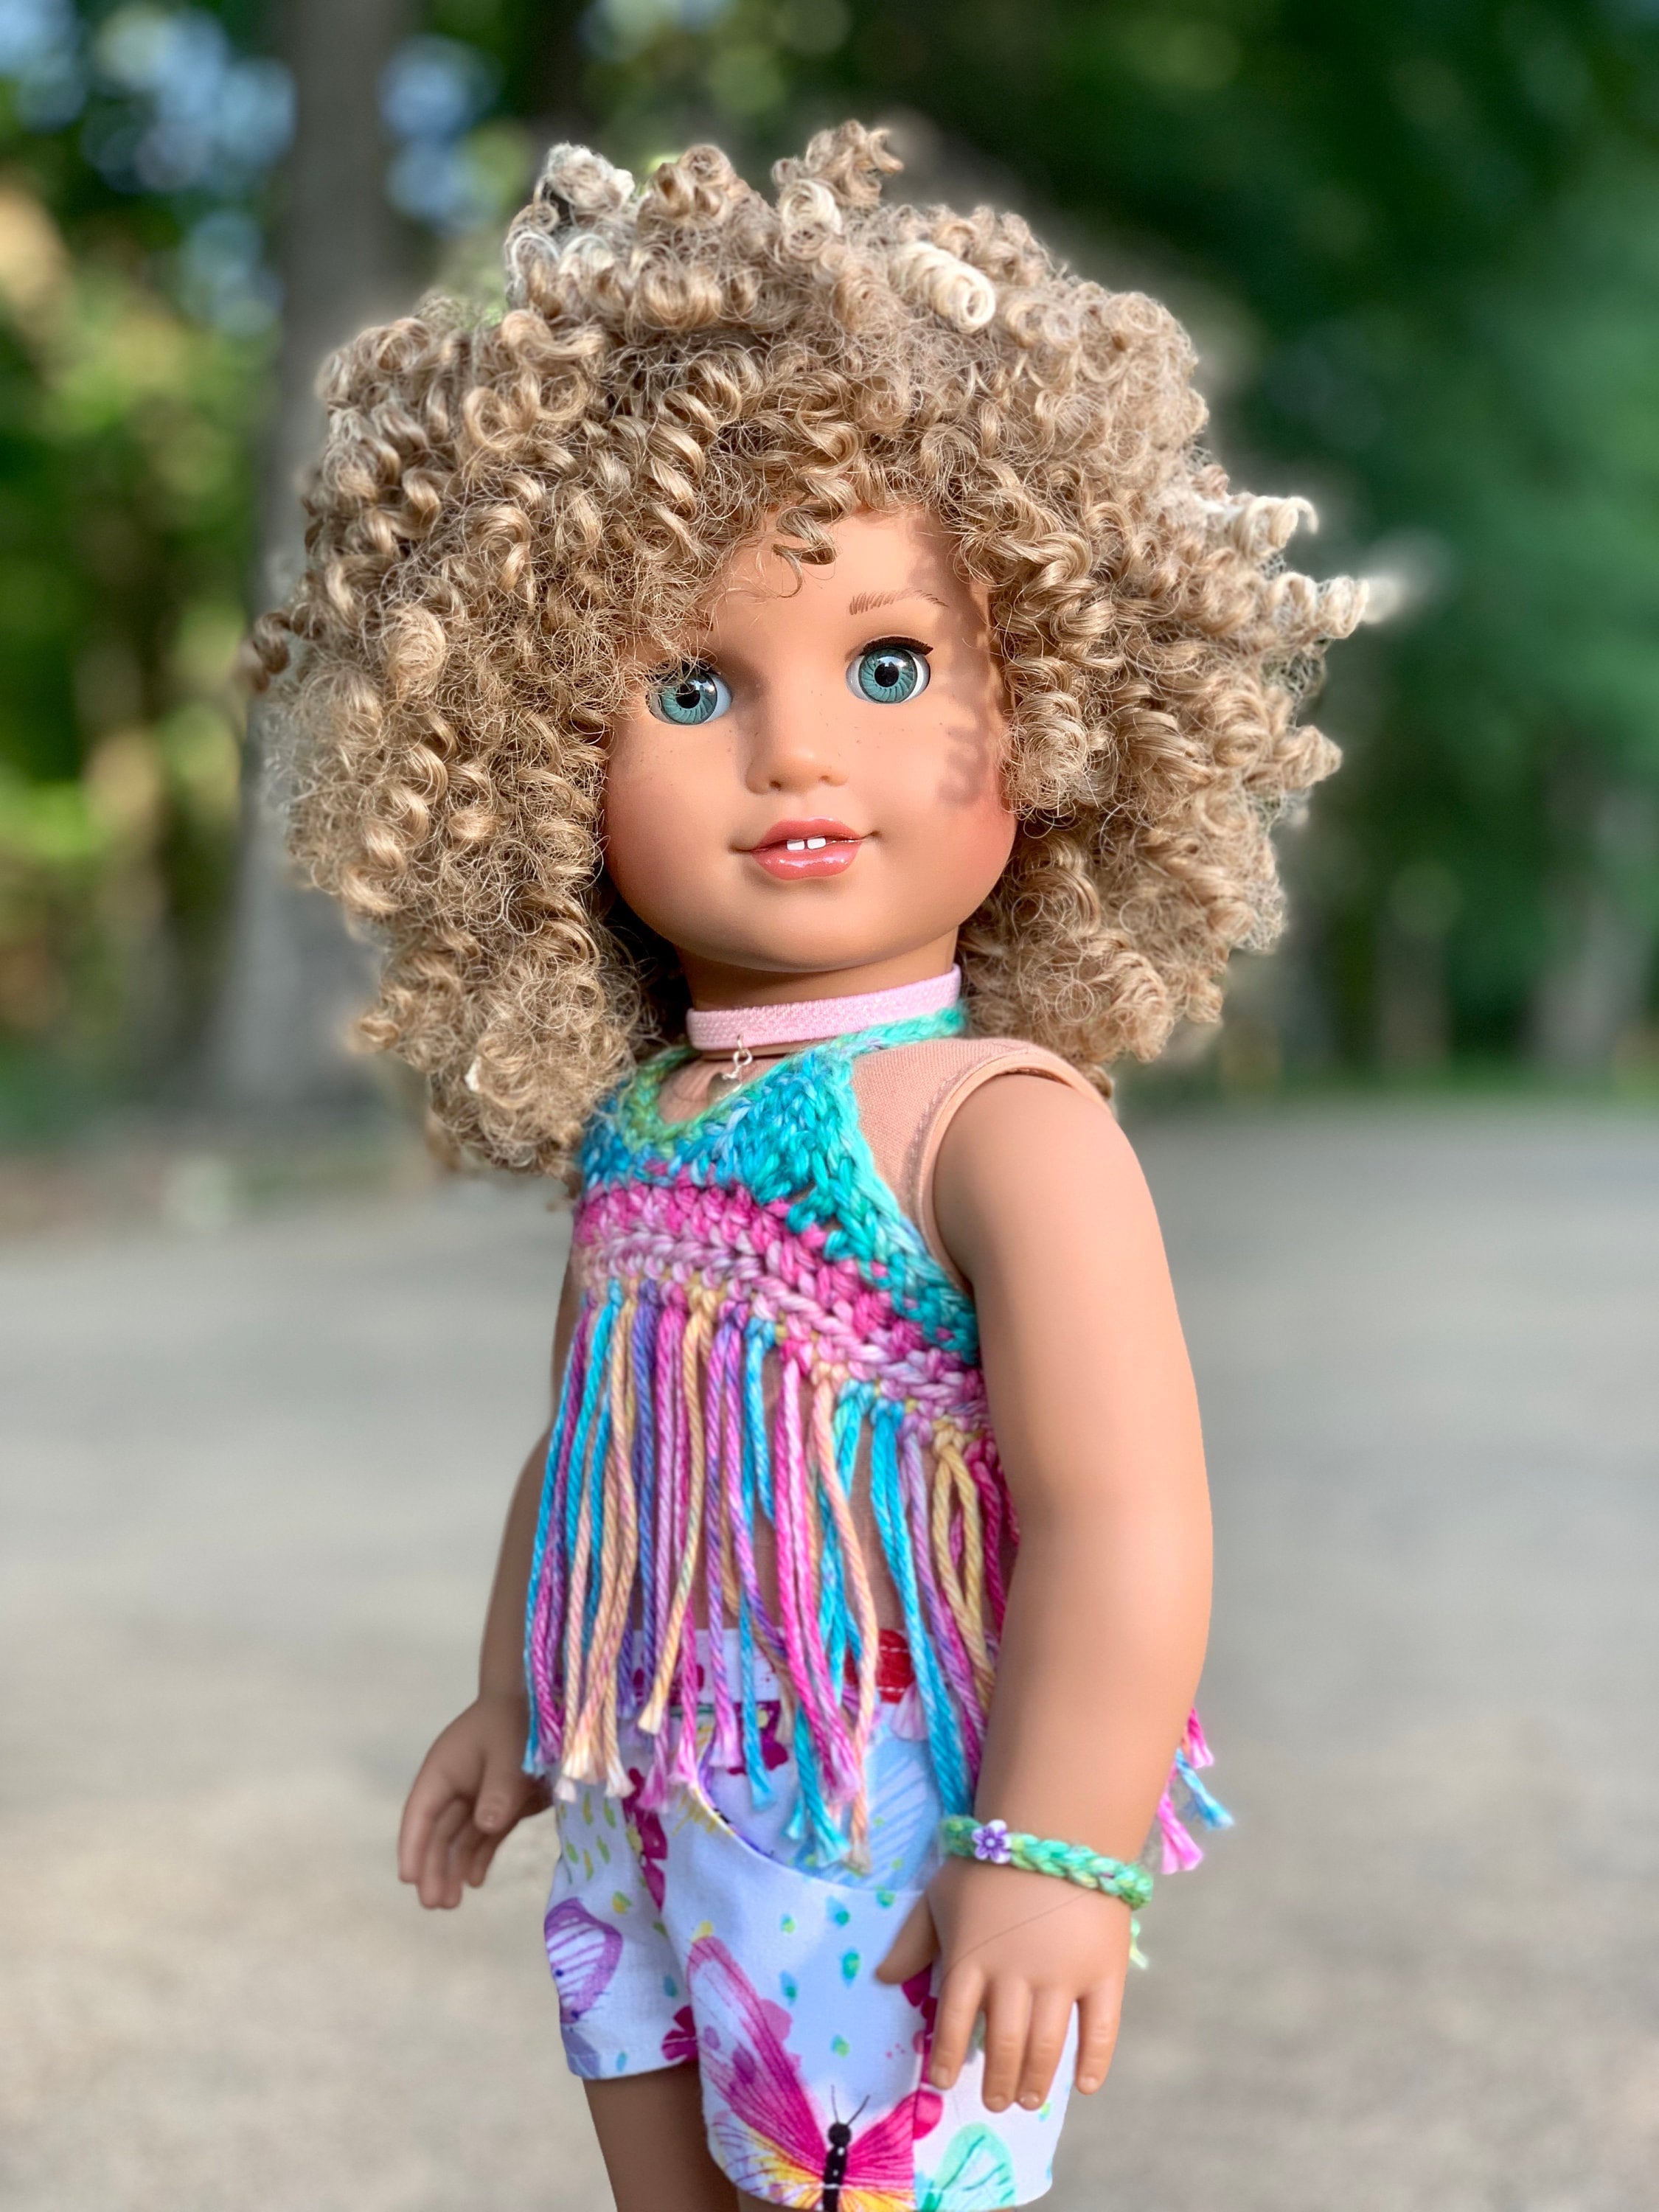 Custom doll wig for 18" American Girl Dolls - Heat Safe - Tangle Resistant - fits 10-11" head size of 18" dolls OG Blythe BJD Gotz  Boho AA!